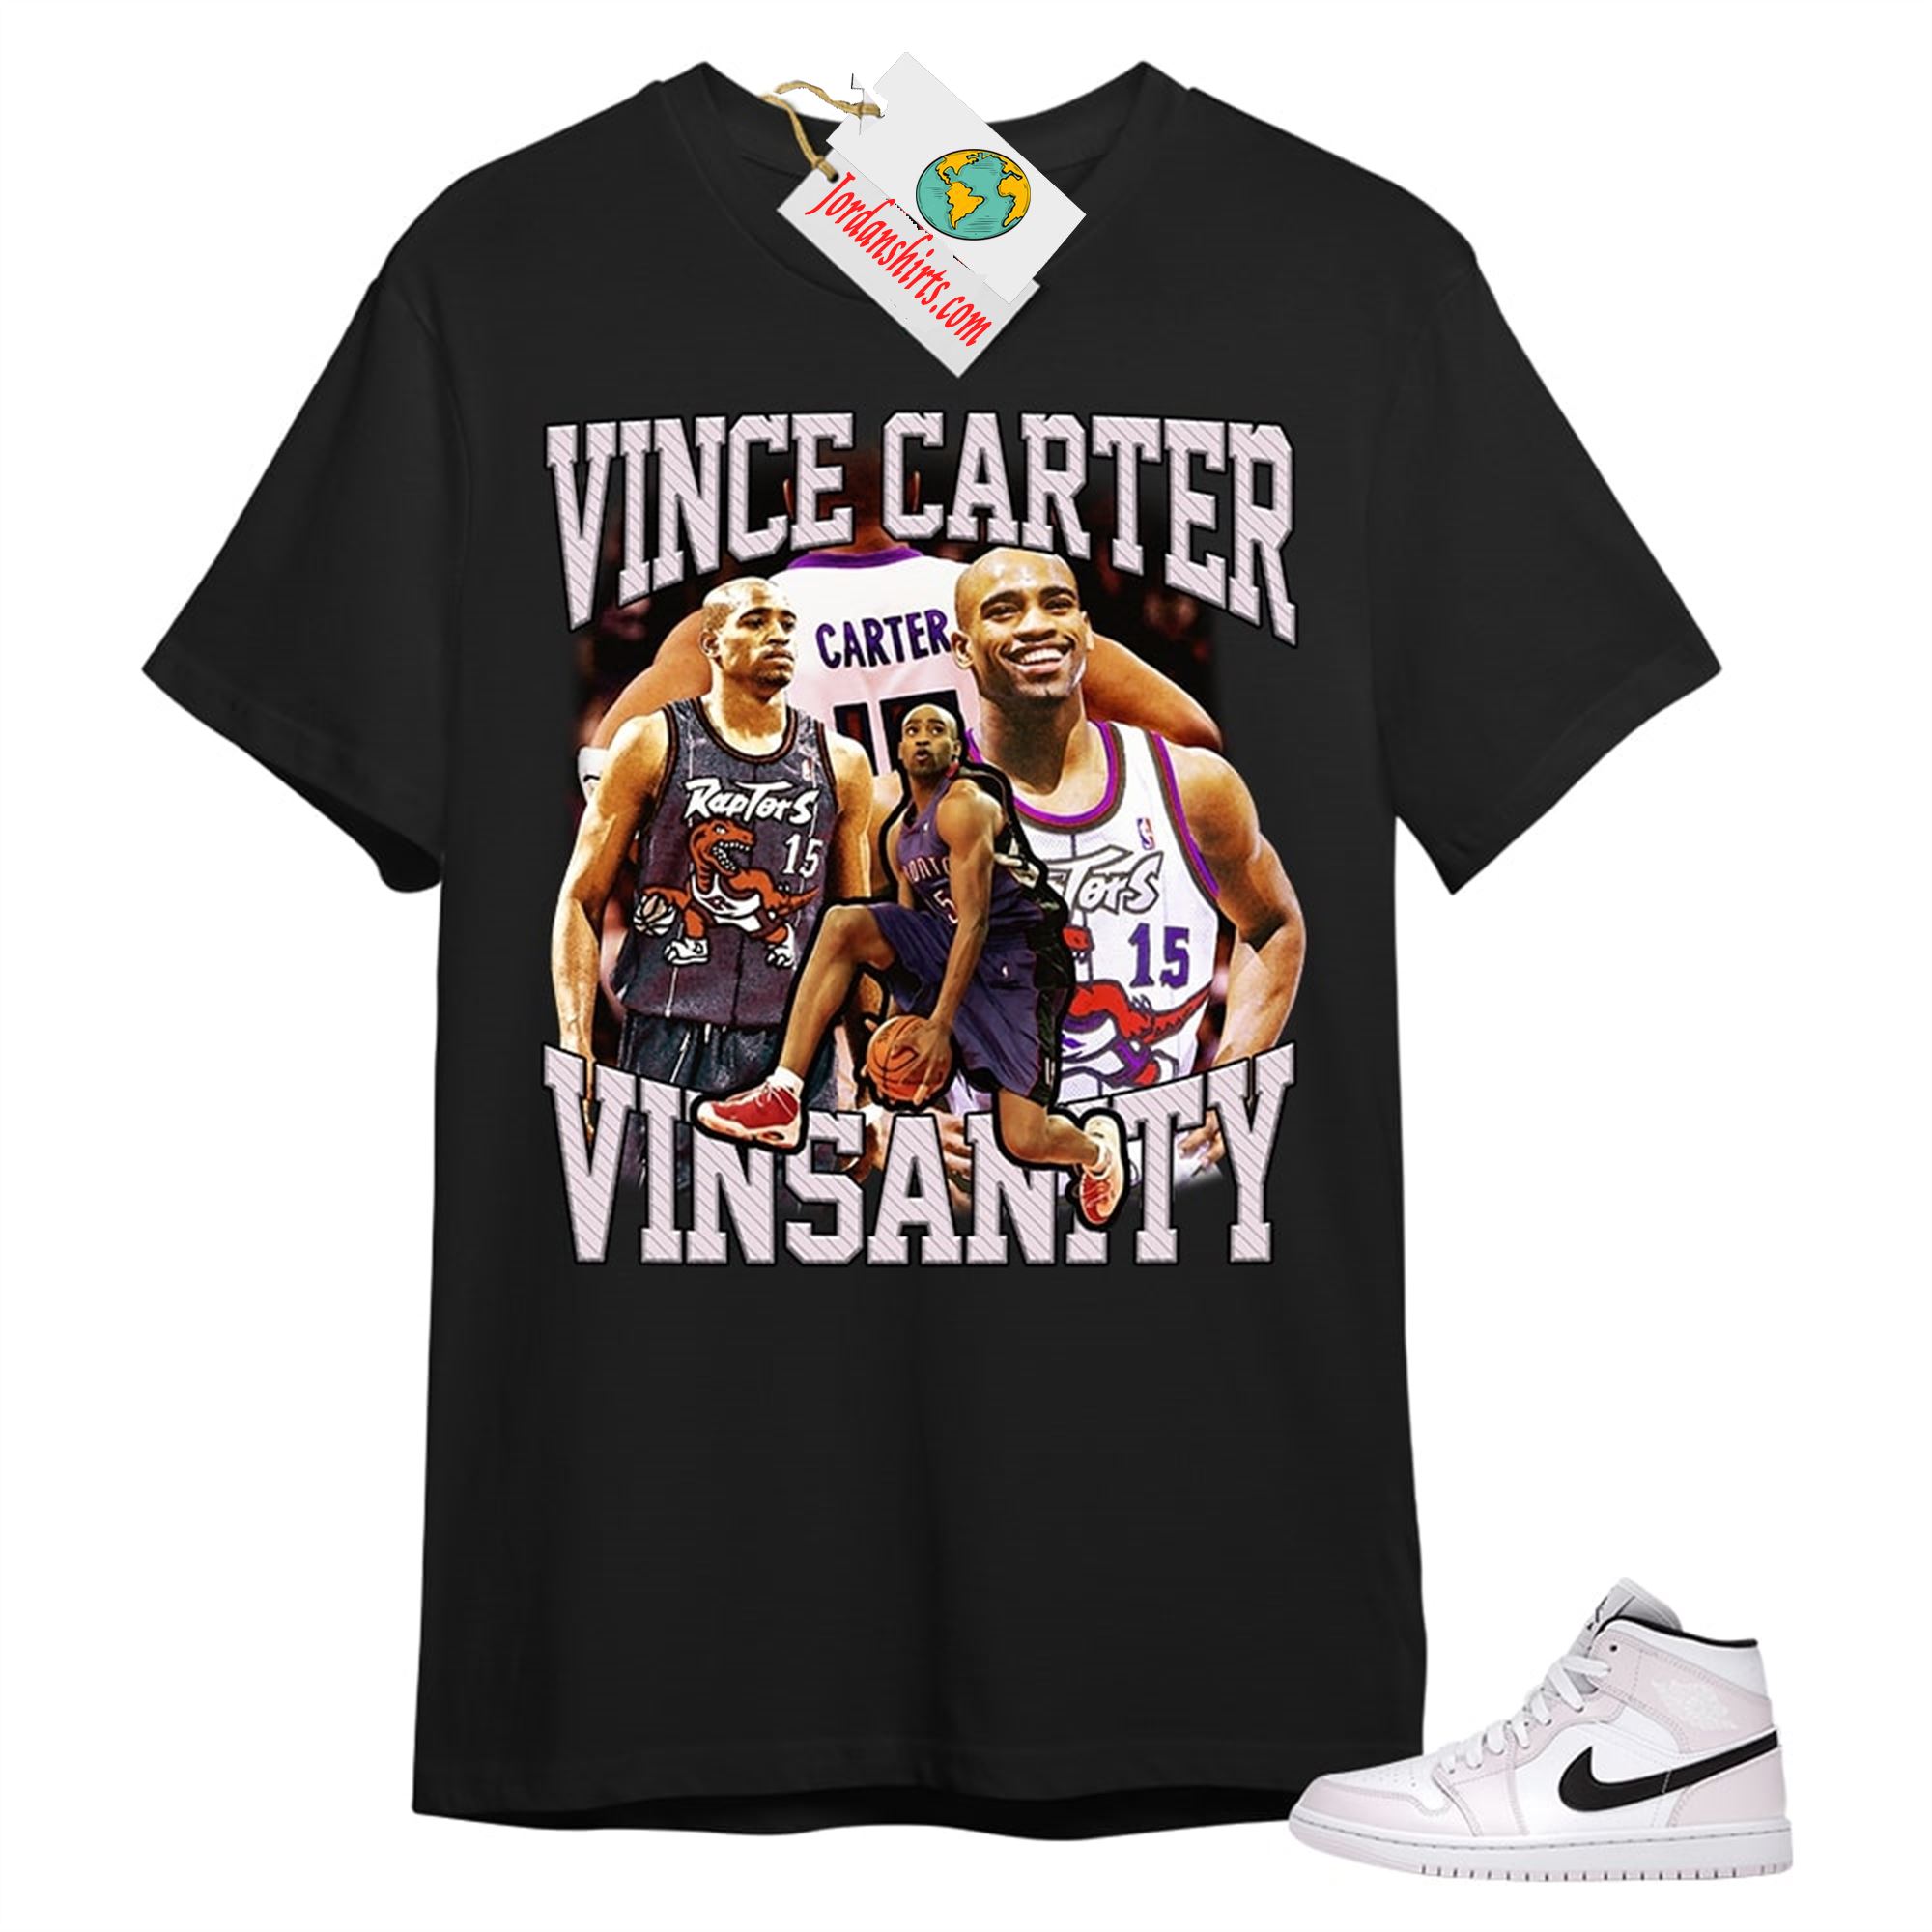 Jordan 1 Shirt, Vince Carter Vinsanity Basketball 90s Retro Vintage Black T-shirt Air Jordan 1 Barely Rose 1s Full Size Up To 5xl